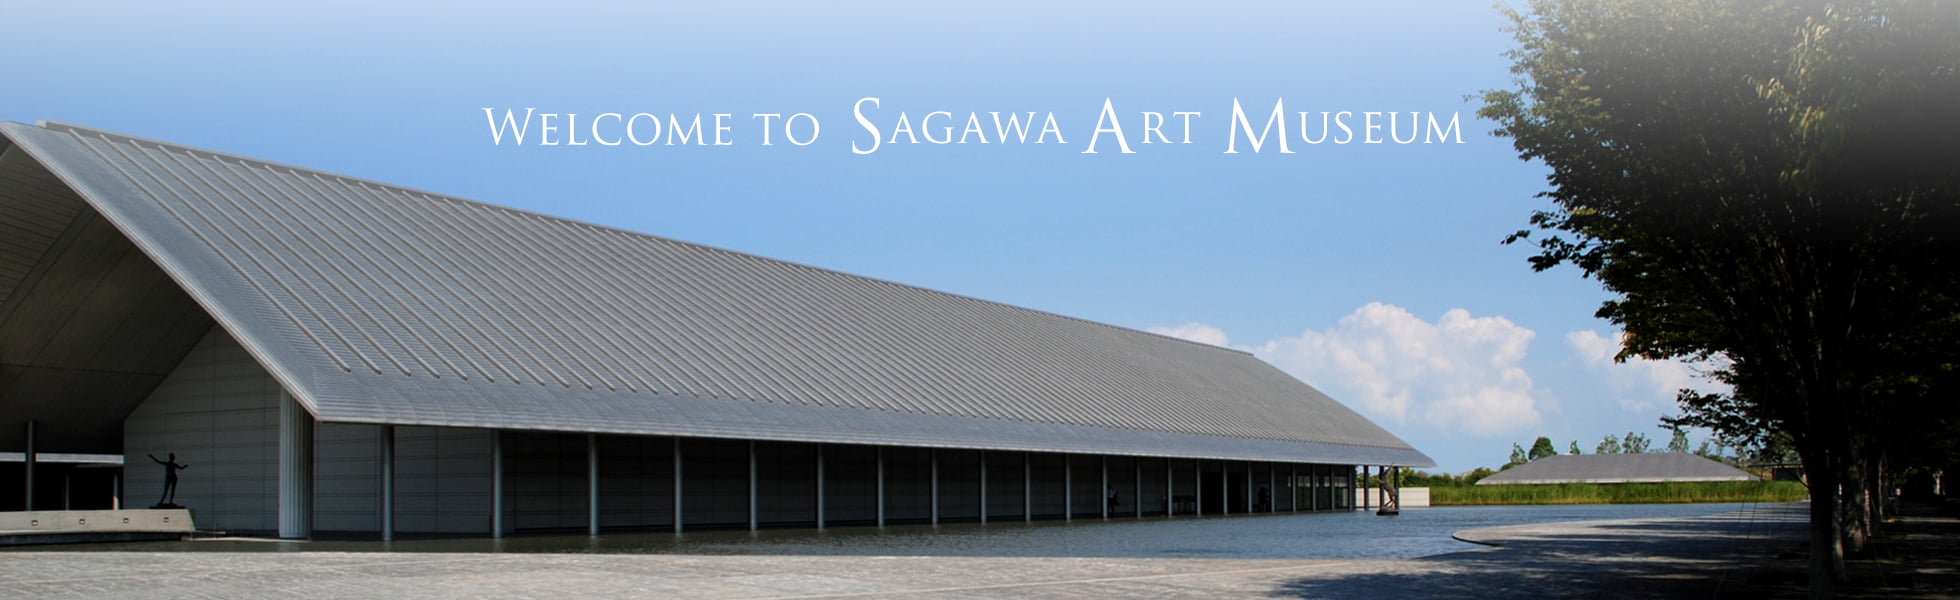 sagawa art museum